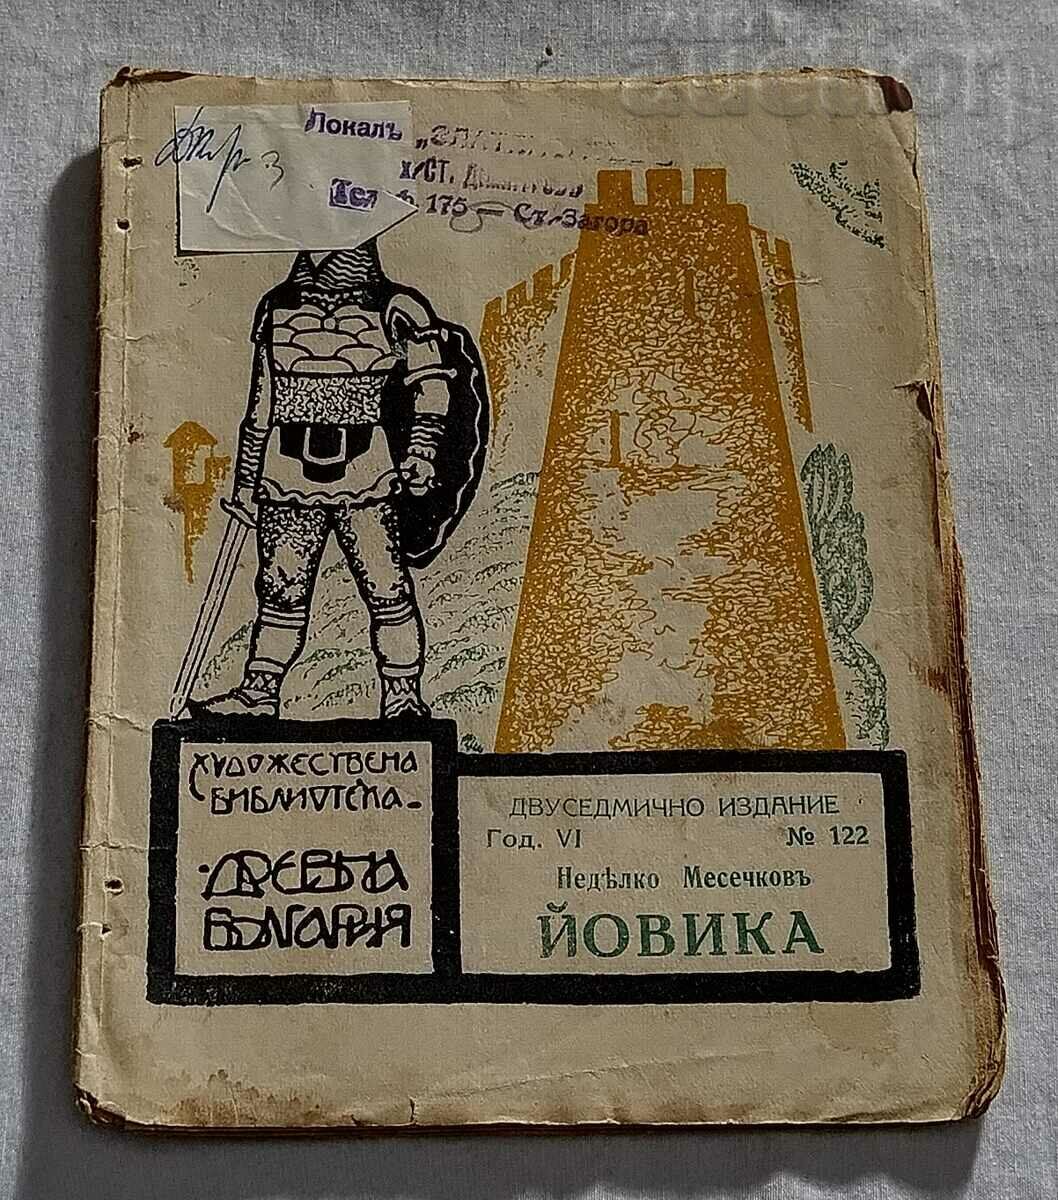 ЙОВИКА Н.МЕСЕЧКОВ БИБЛ."ДРЕВНА БЪЛГАРИЯ" 1933 г.